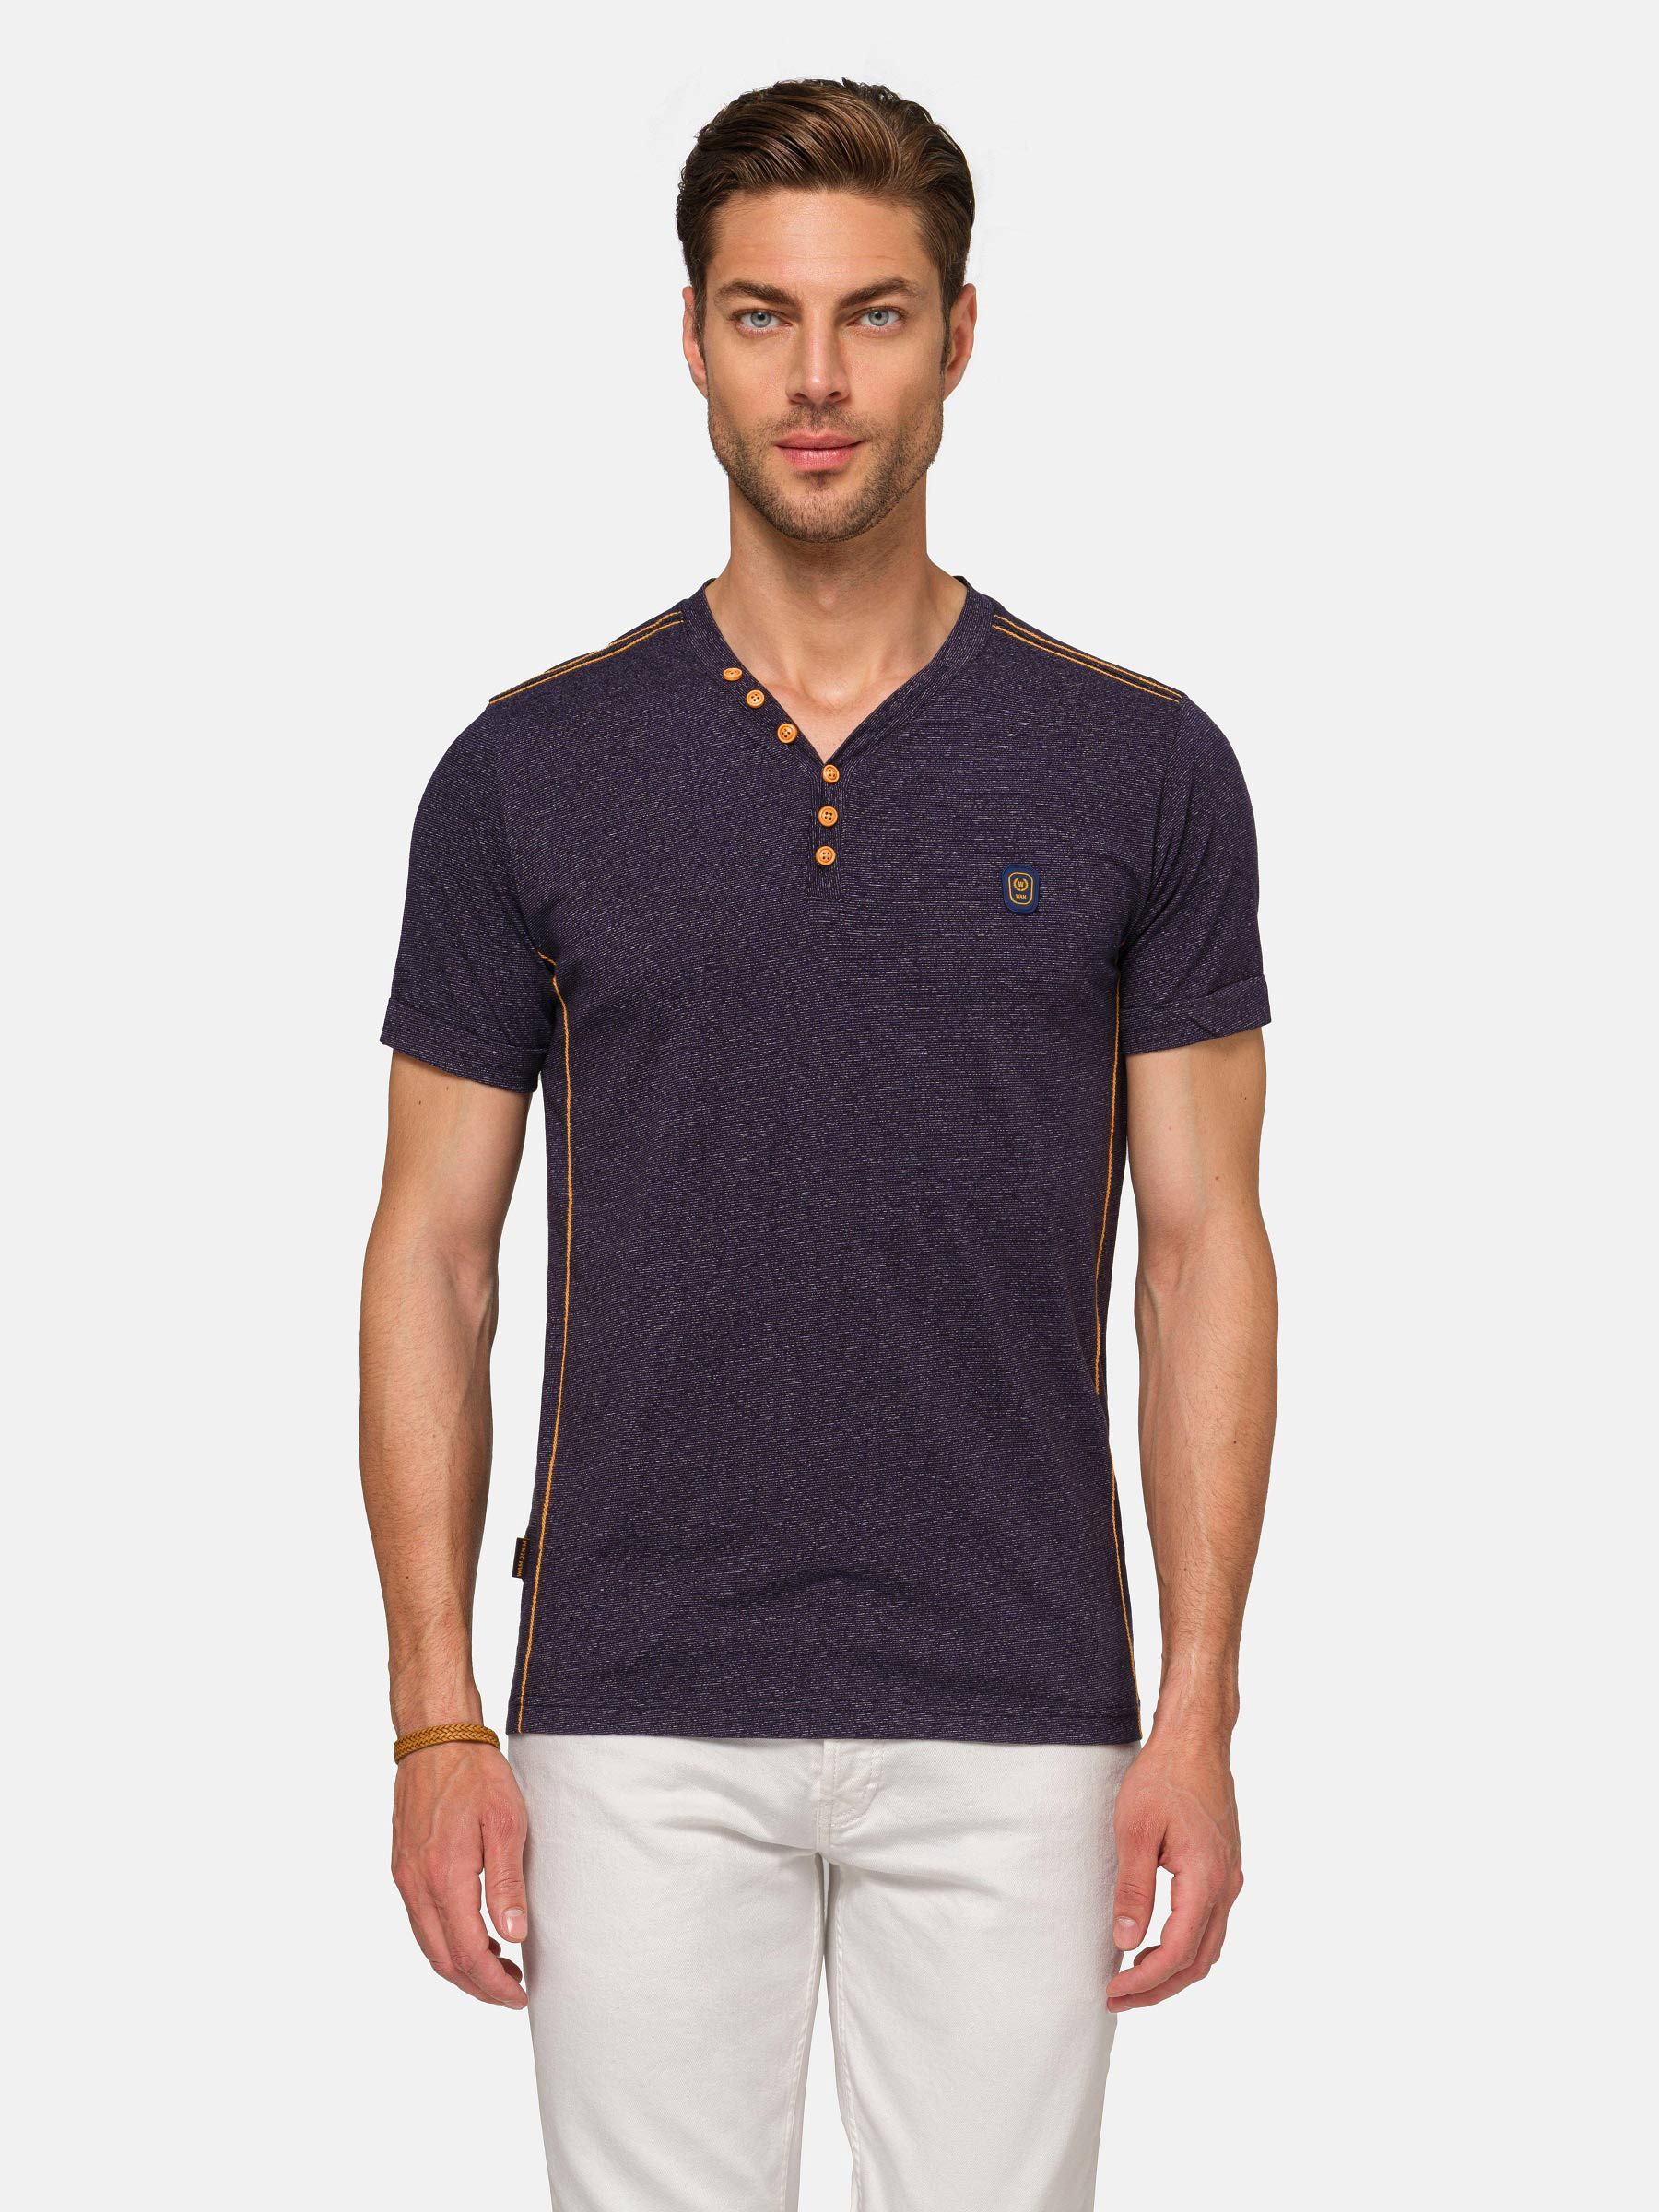 Men's V-neck T-shirts, Stylish and Comfortable Cotton Shirts